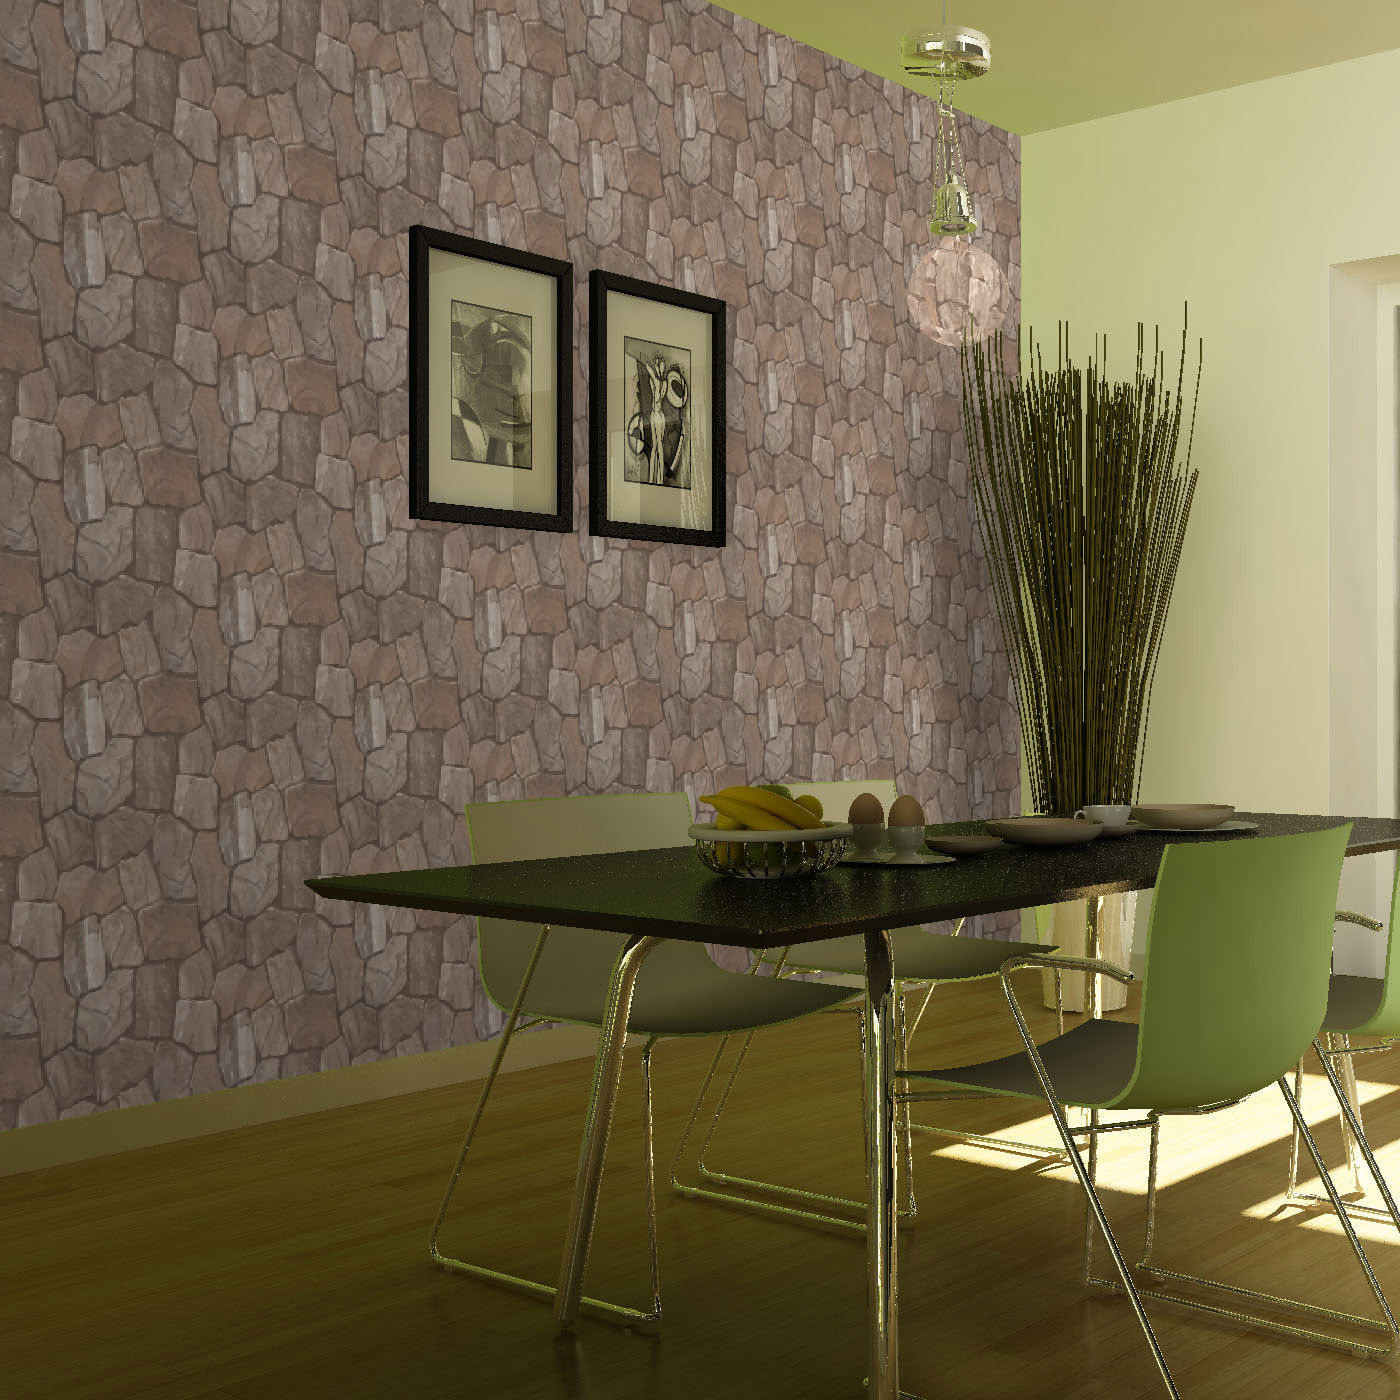 wallpaper for bedroom walls india,green,room,wall,furniture,interior design